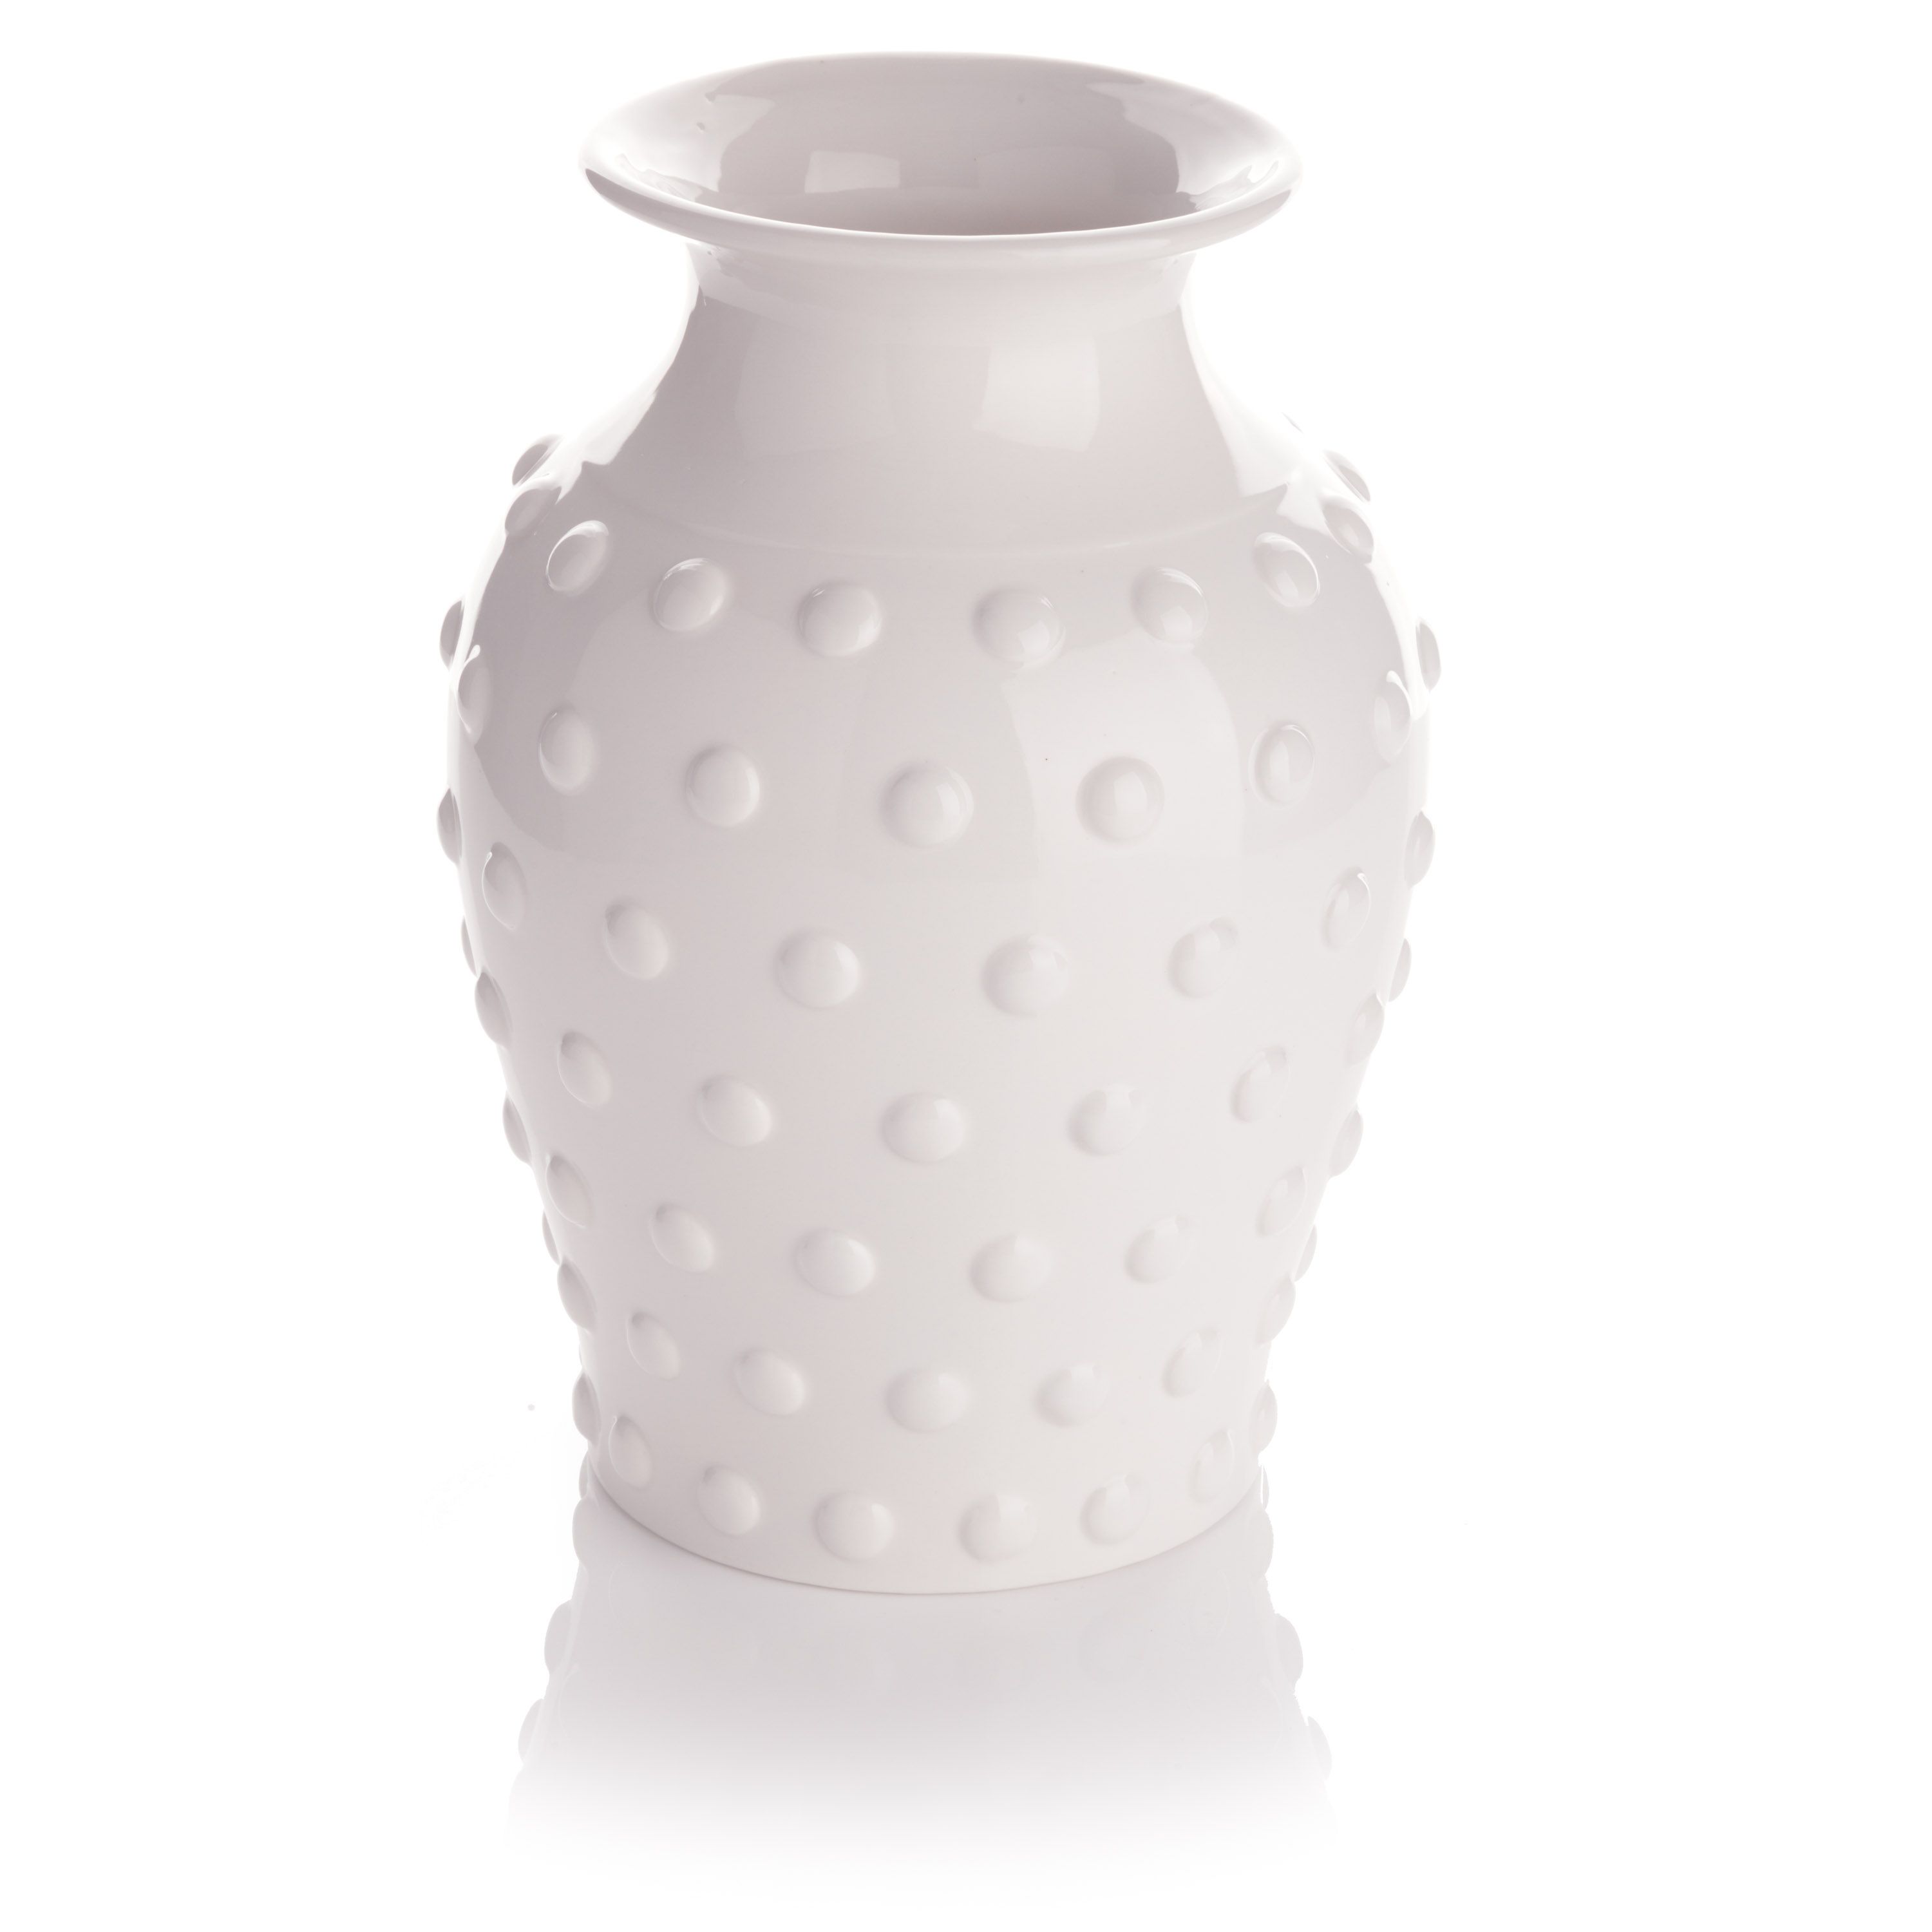 My Texas House Glass Hobnail Vase, 12" Tall, White | Walmart (US)